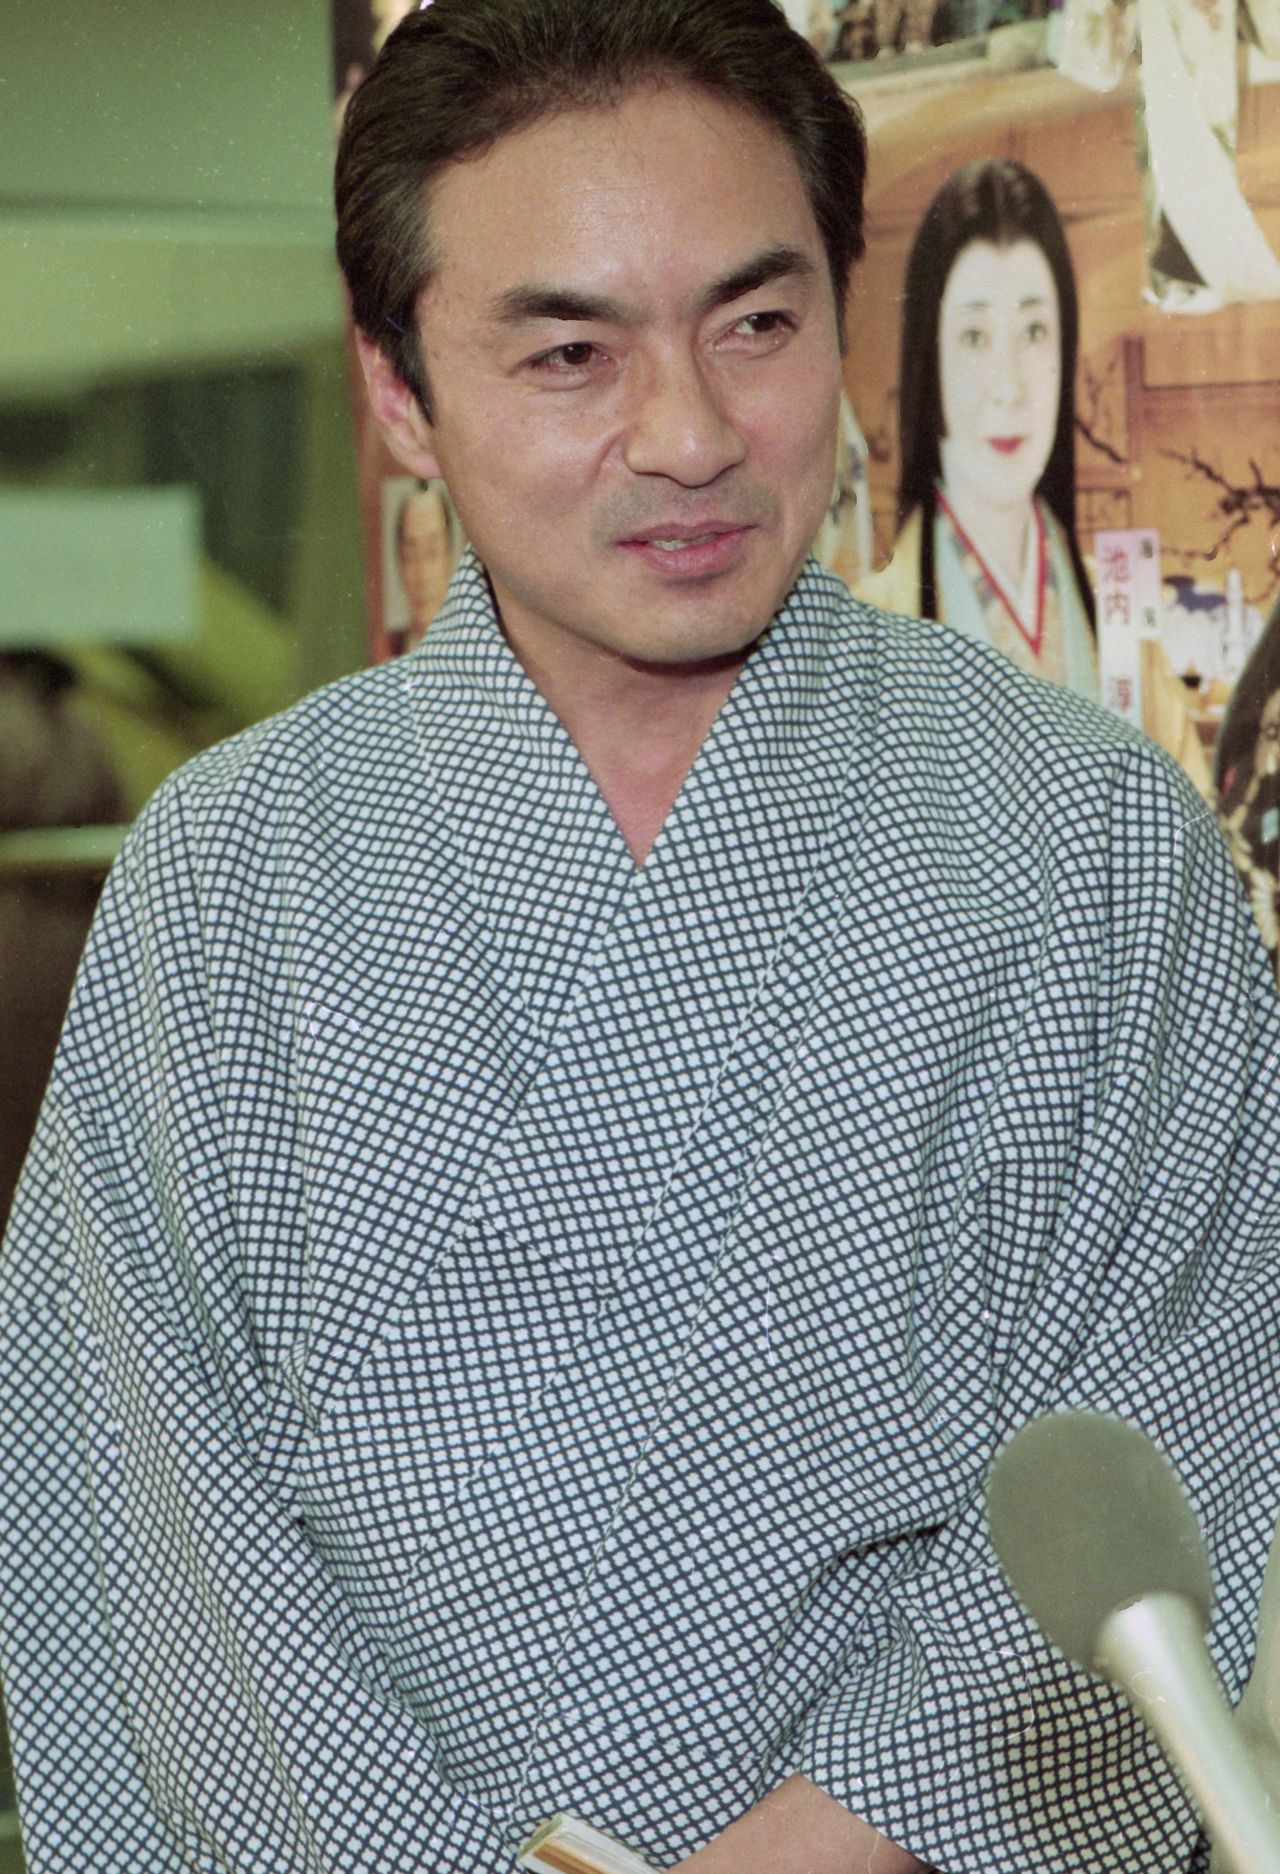 Saigō Teruhiko in December 1996. (© Jiji)